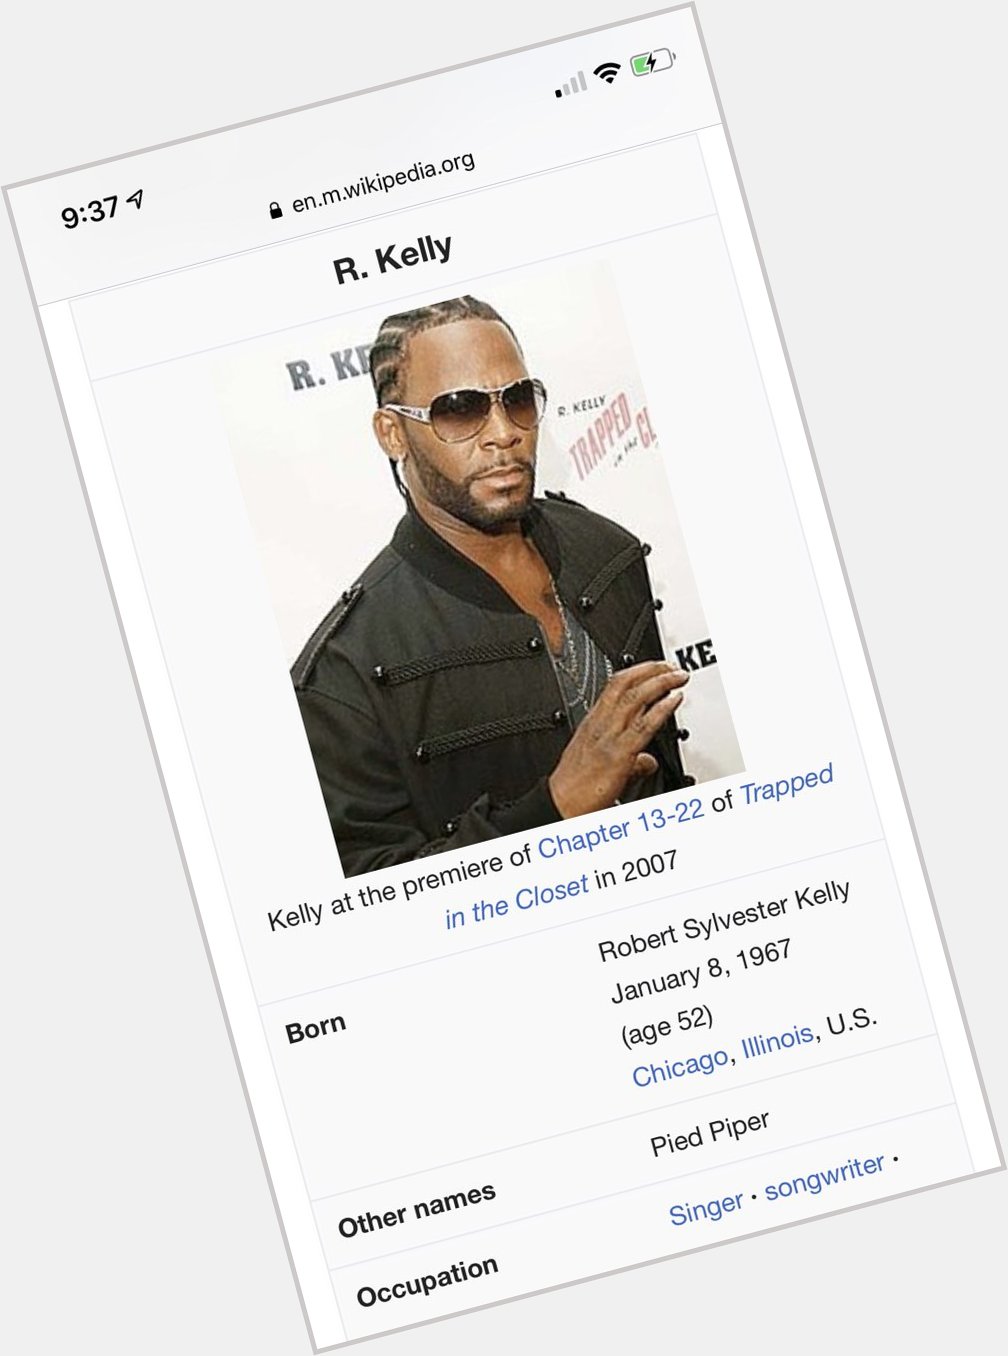 So who s going to wish R. Kelly a happy birthday tomorrow.    